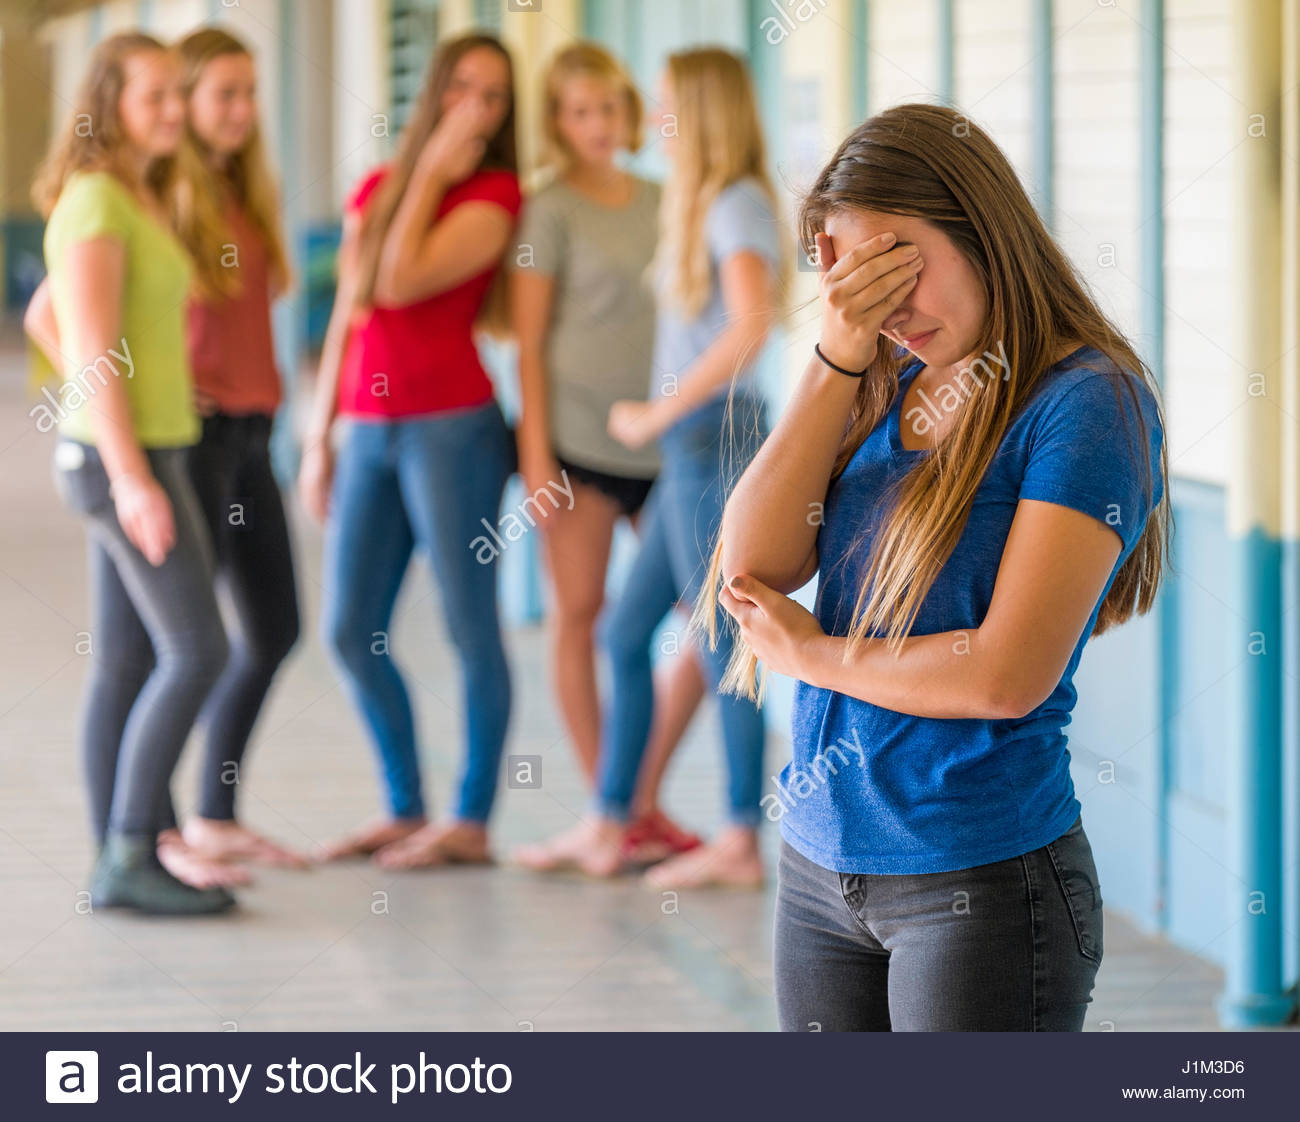 Schoolgirl bully